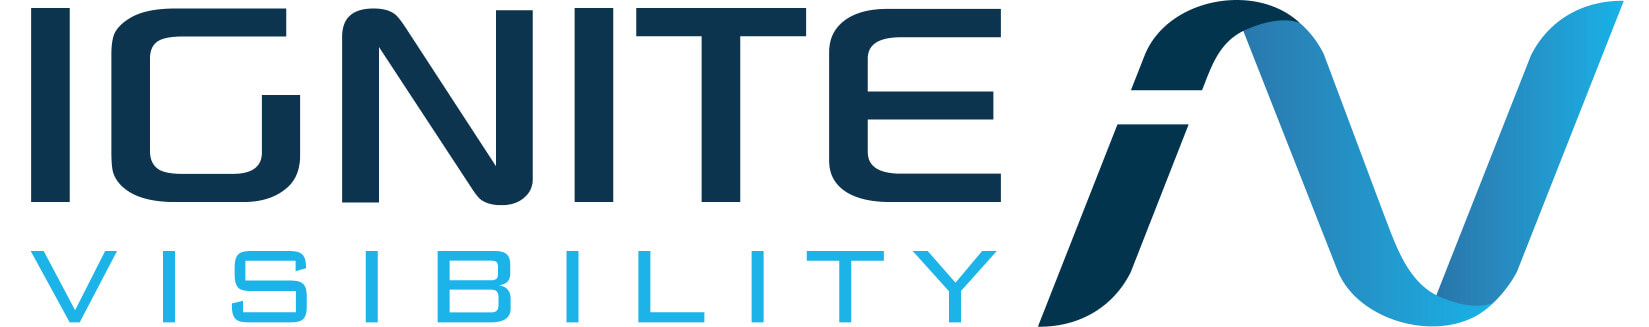 Best Hotel SEO Company Logo: Ignite Visibility